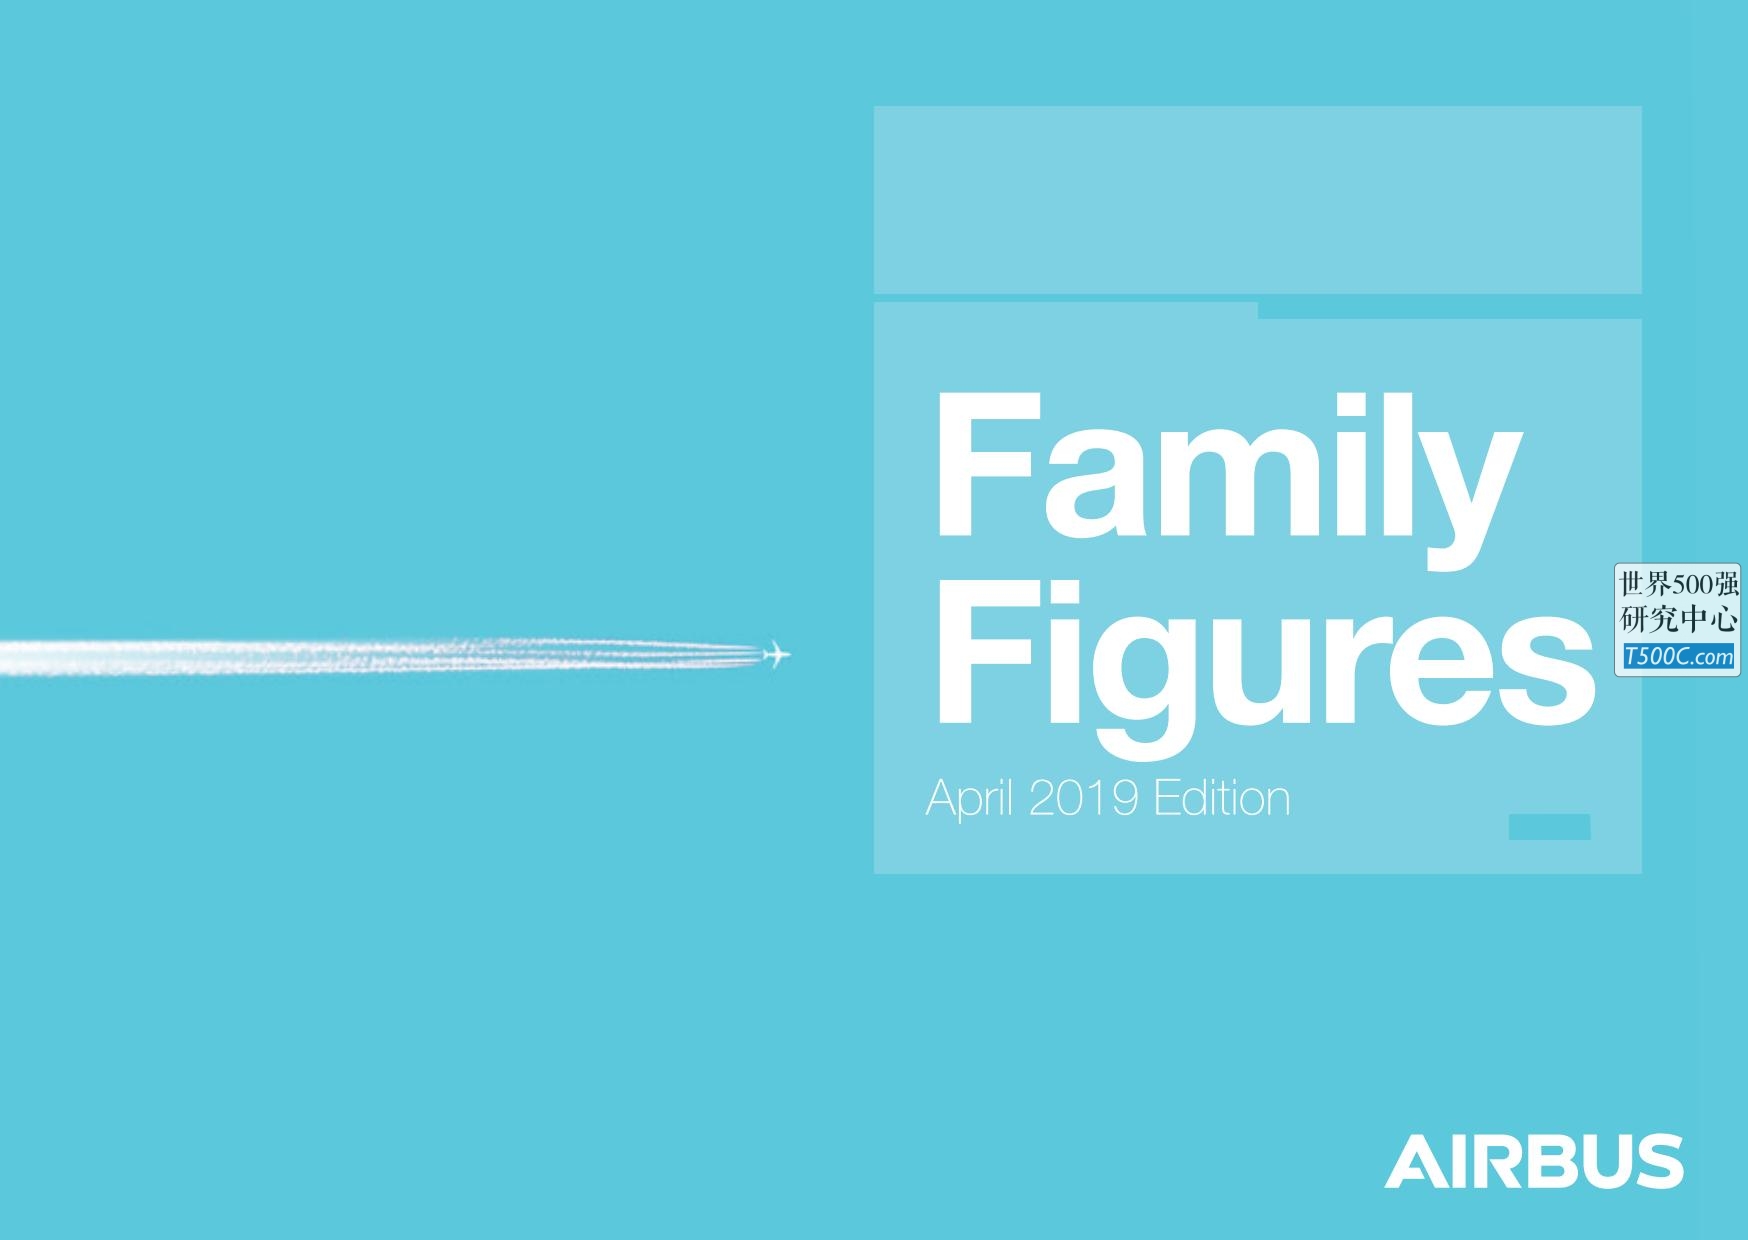 空中客车Airbus_产品宣传册Brochure_T500C.com_Airbus-Family-Figures-booklet.pdf